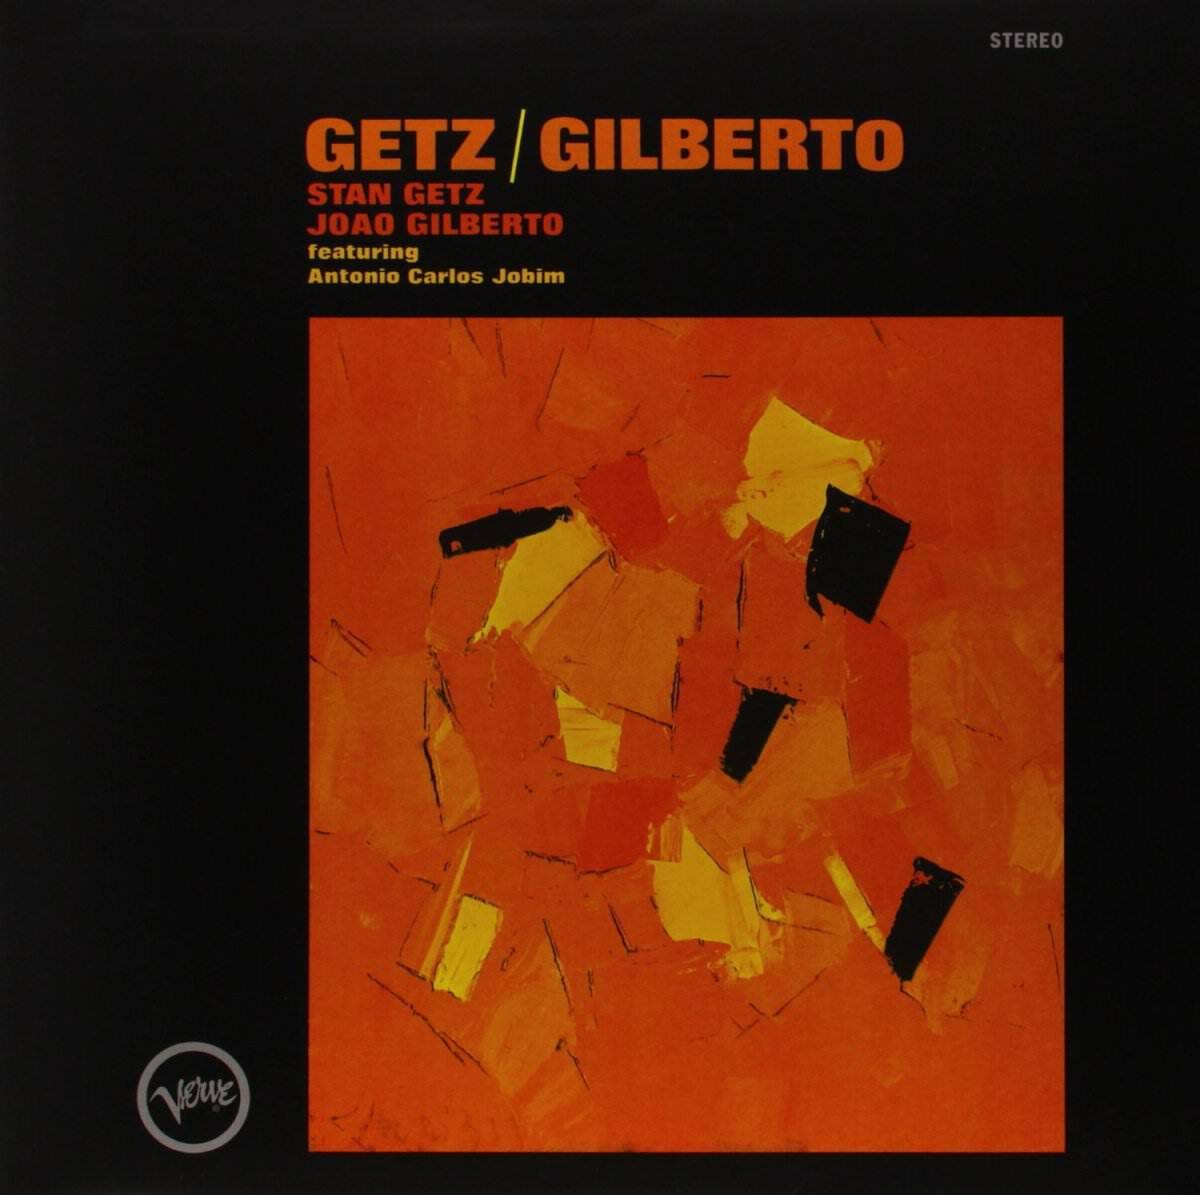 Stan Getz & Joao Gilberto GETZ/GILBERTO Verve NEW VINYL LP